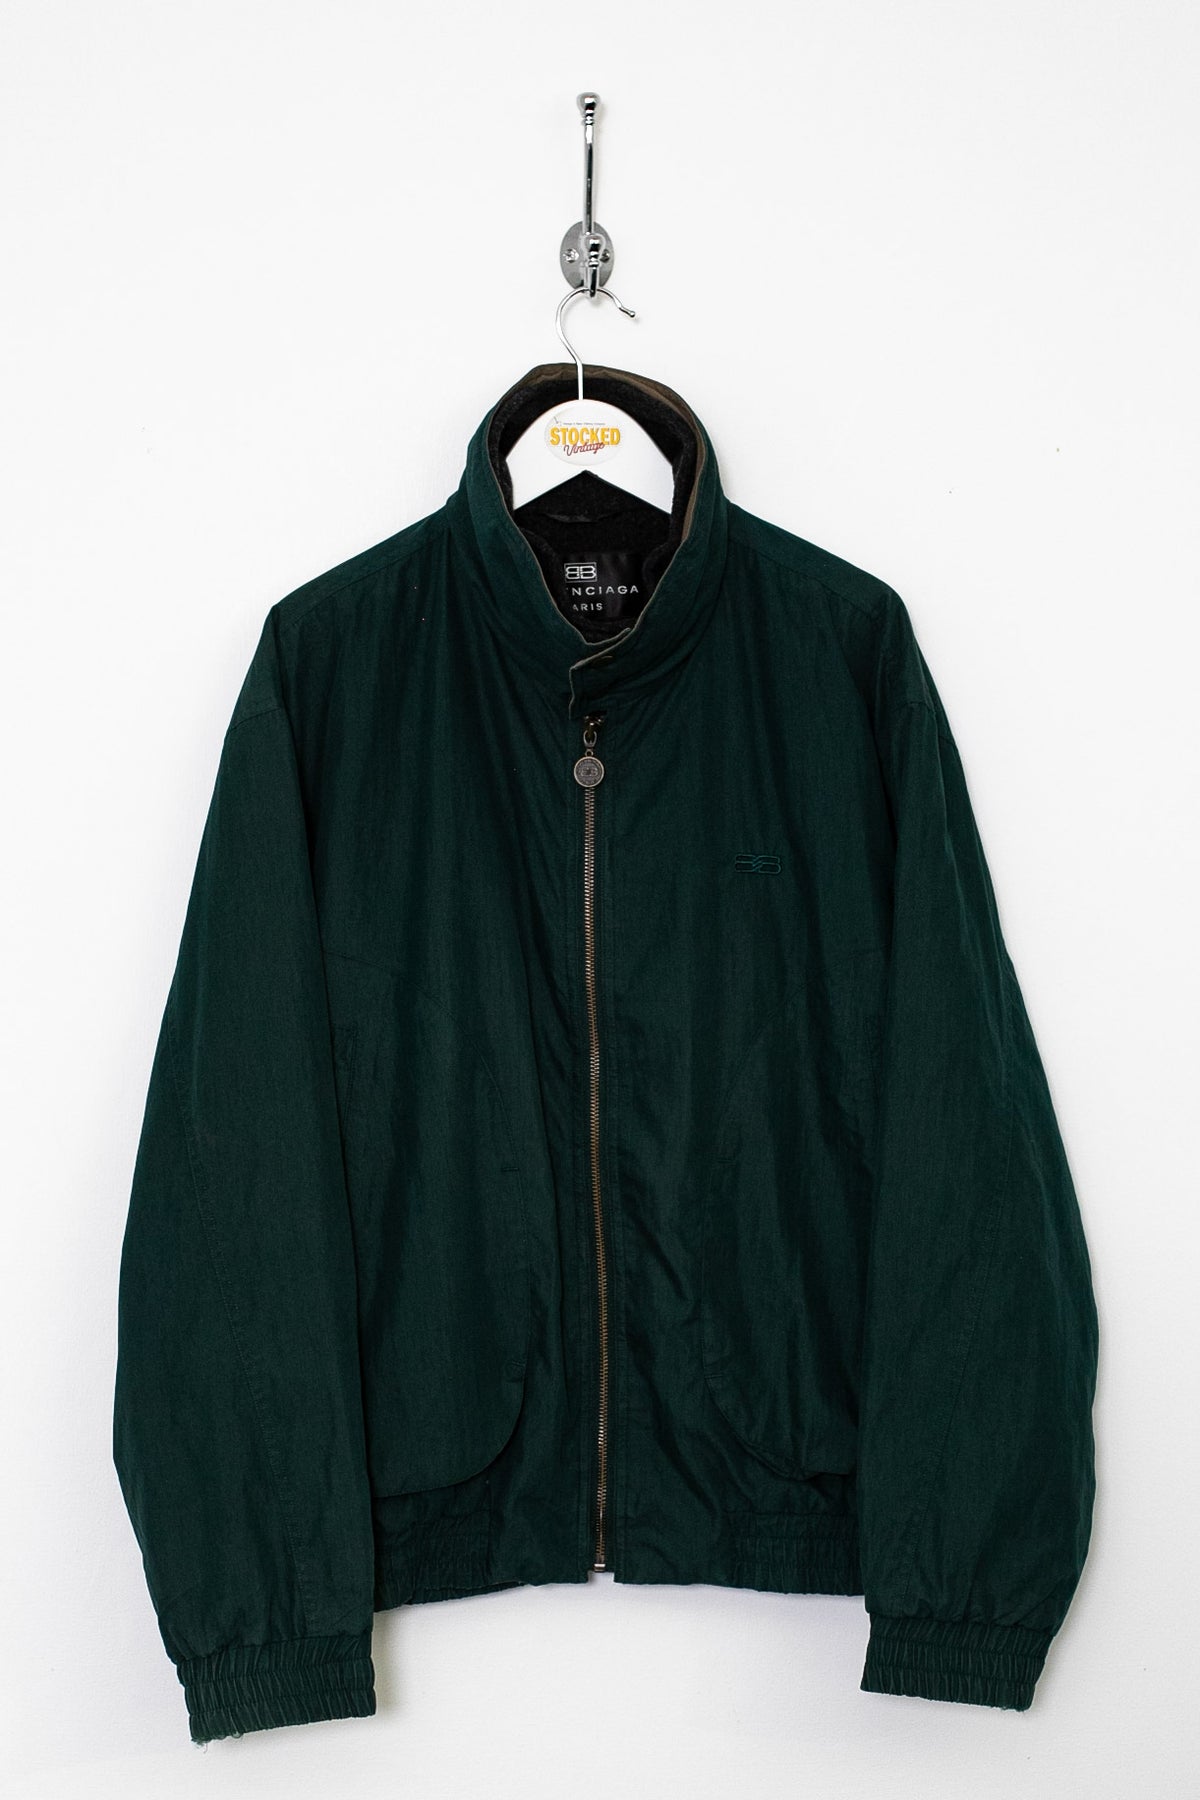 90s Balenciaga Fleece Lined Jacket (M)